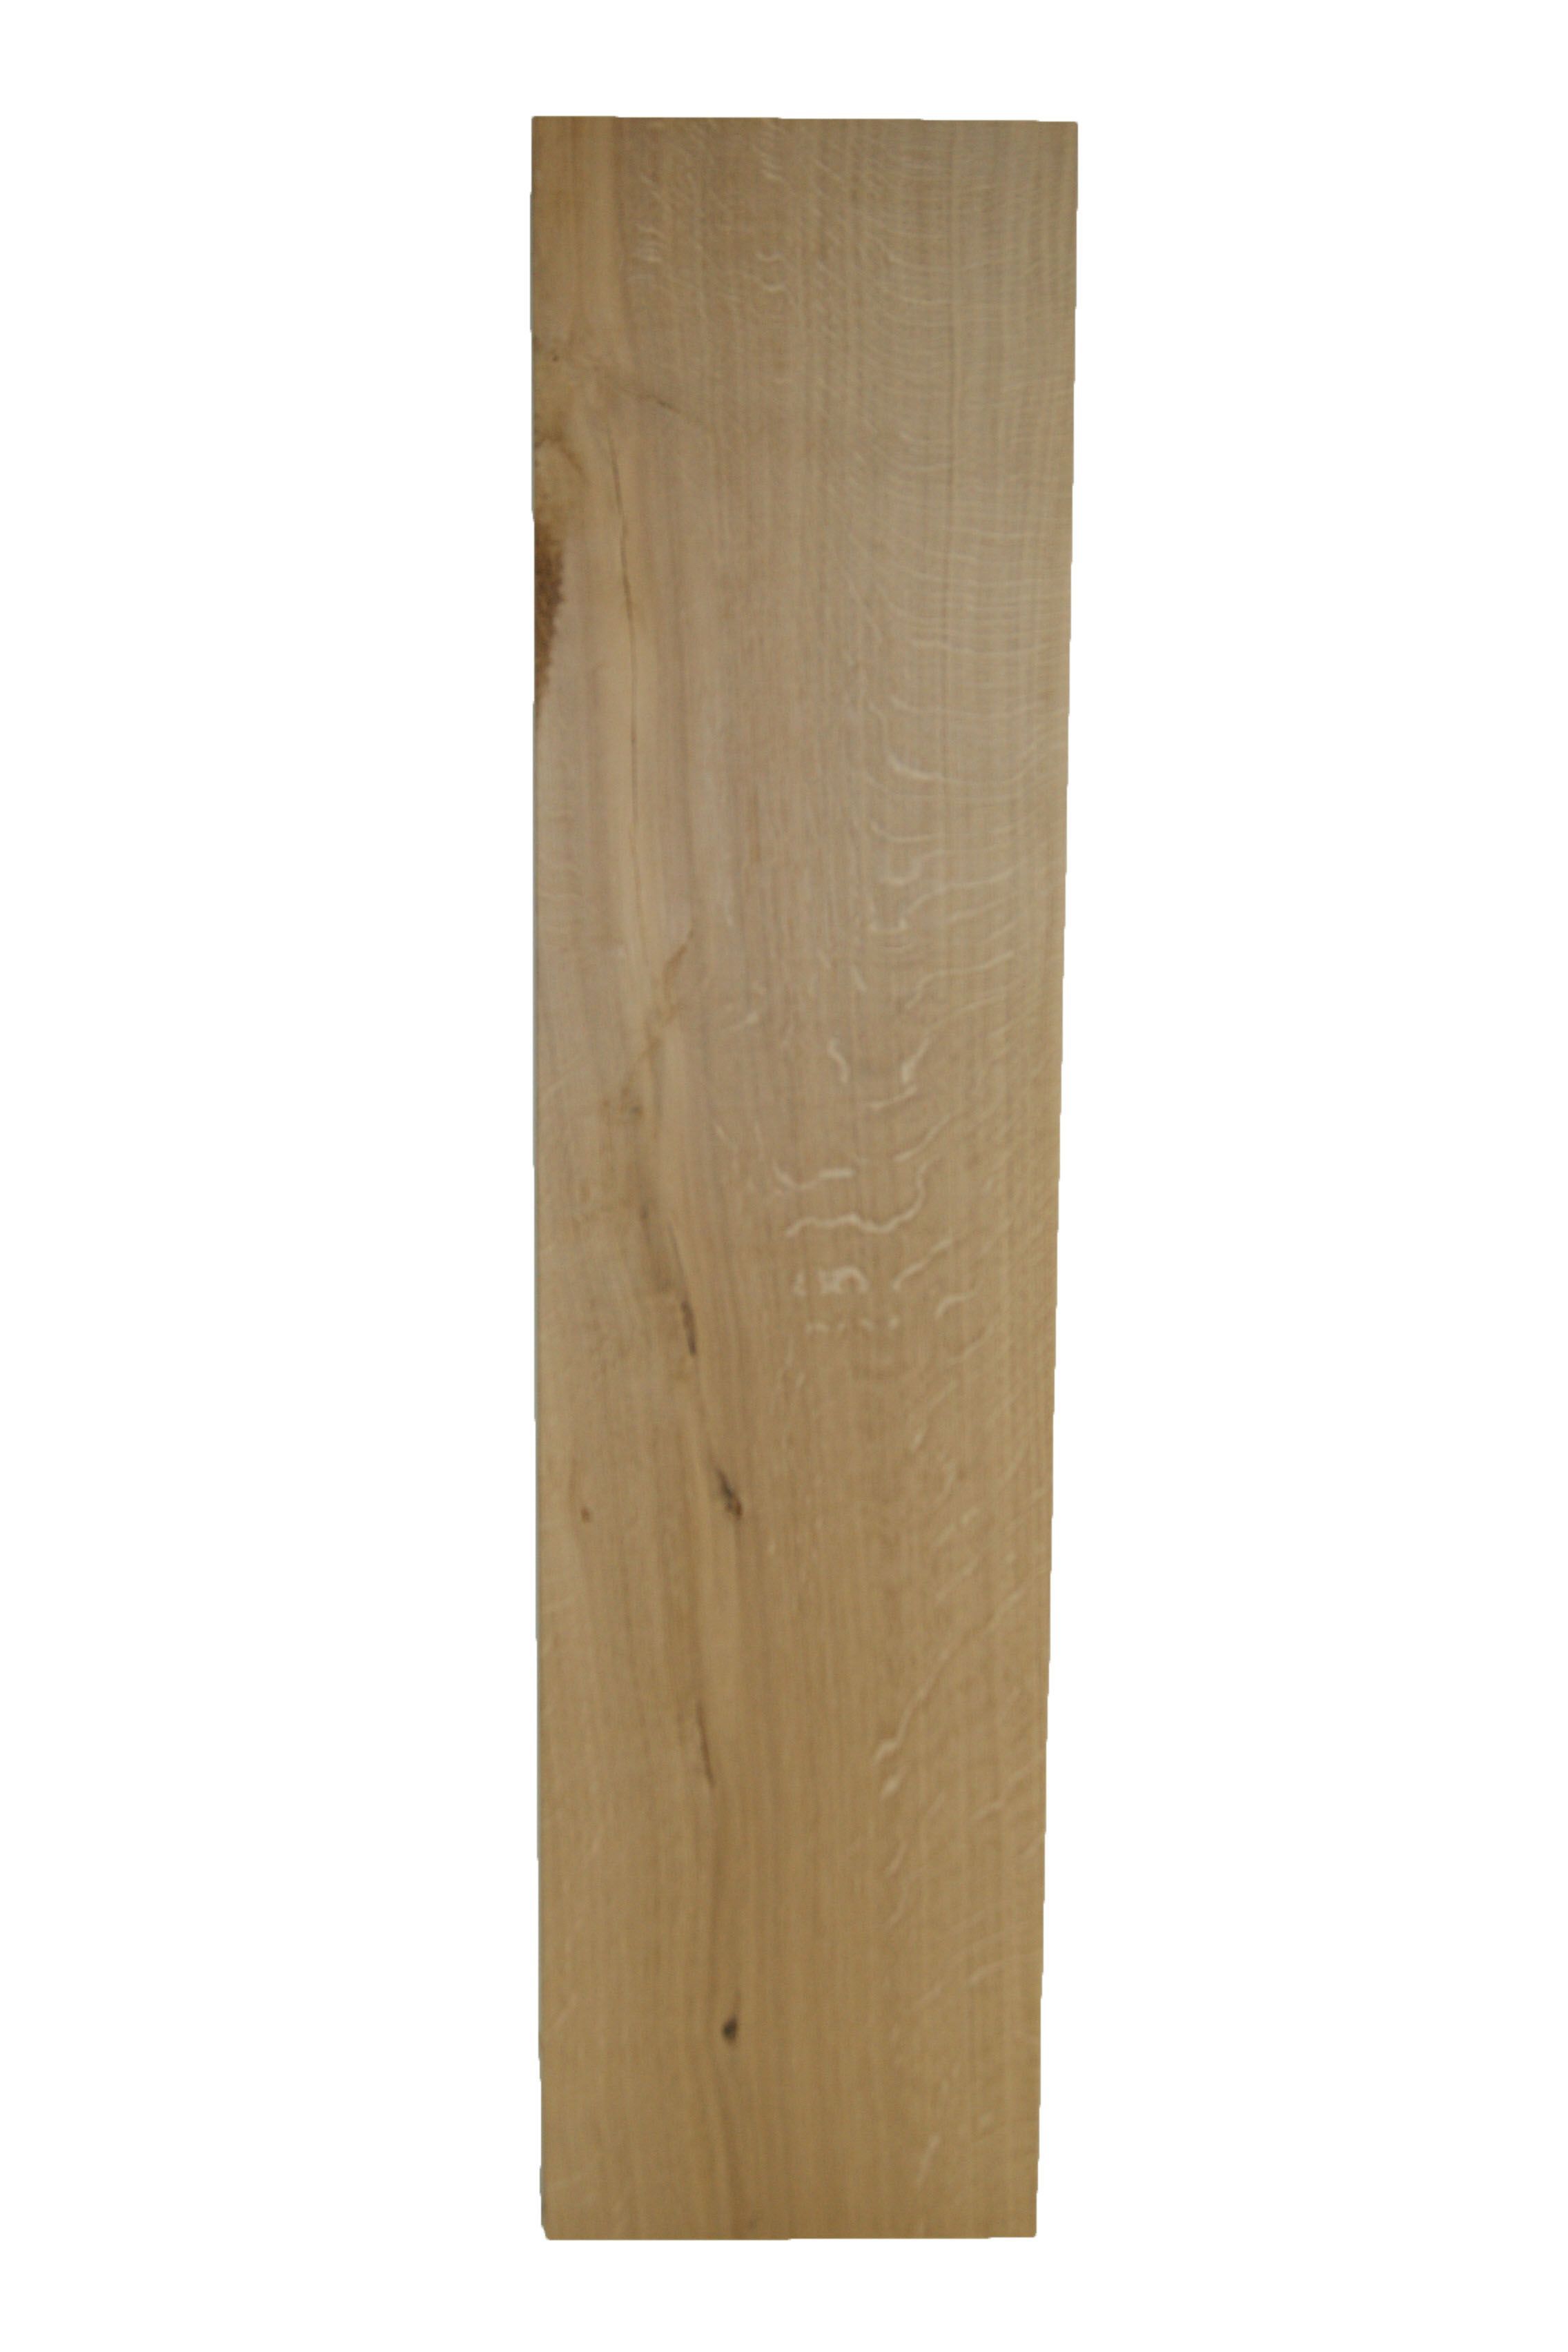 Natural Square edge Oak Furniture board, (L)1.2m (W)200mm-300mm (T)25mm